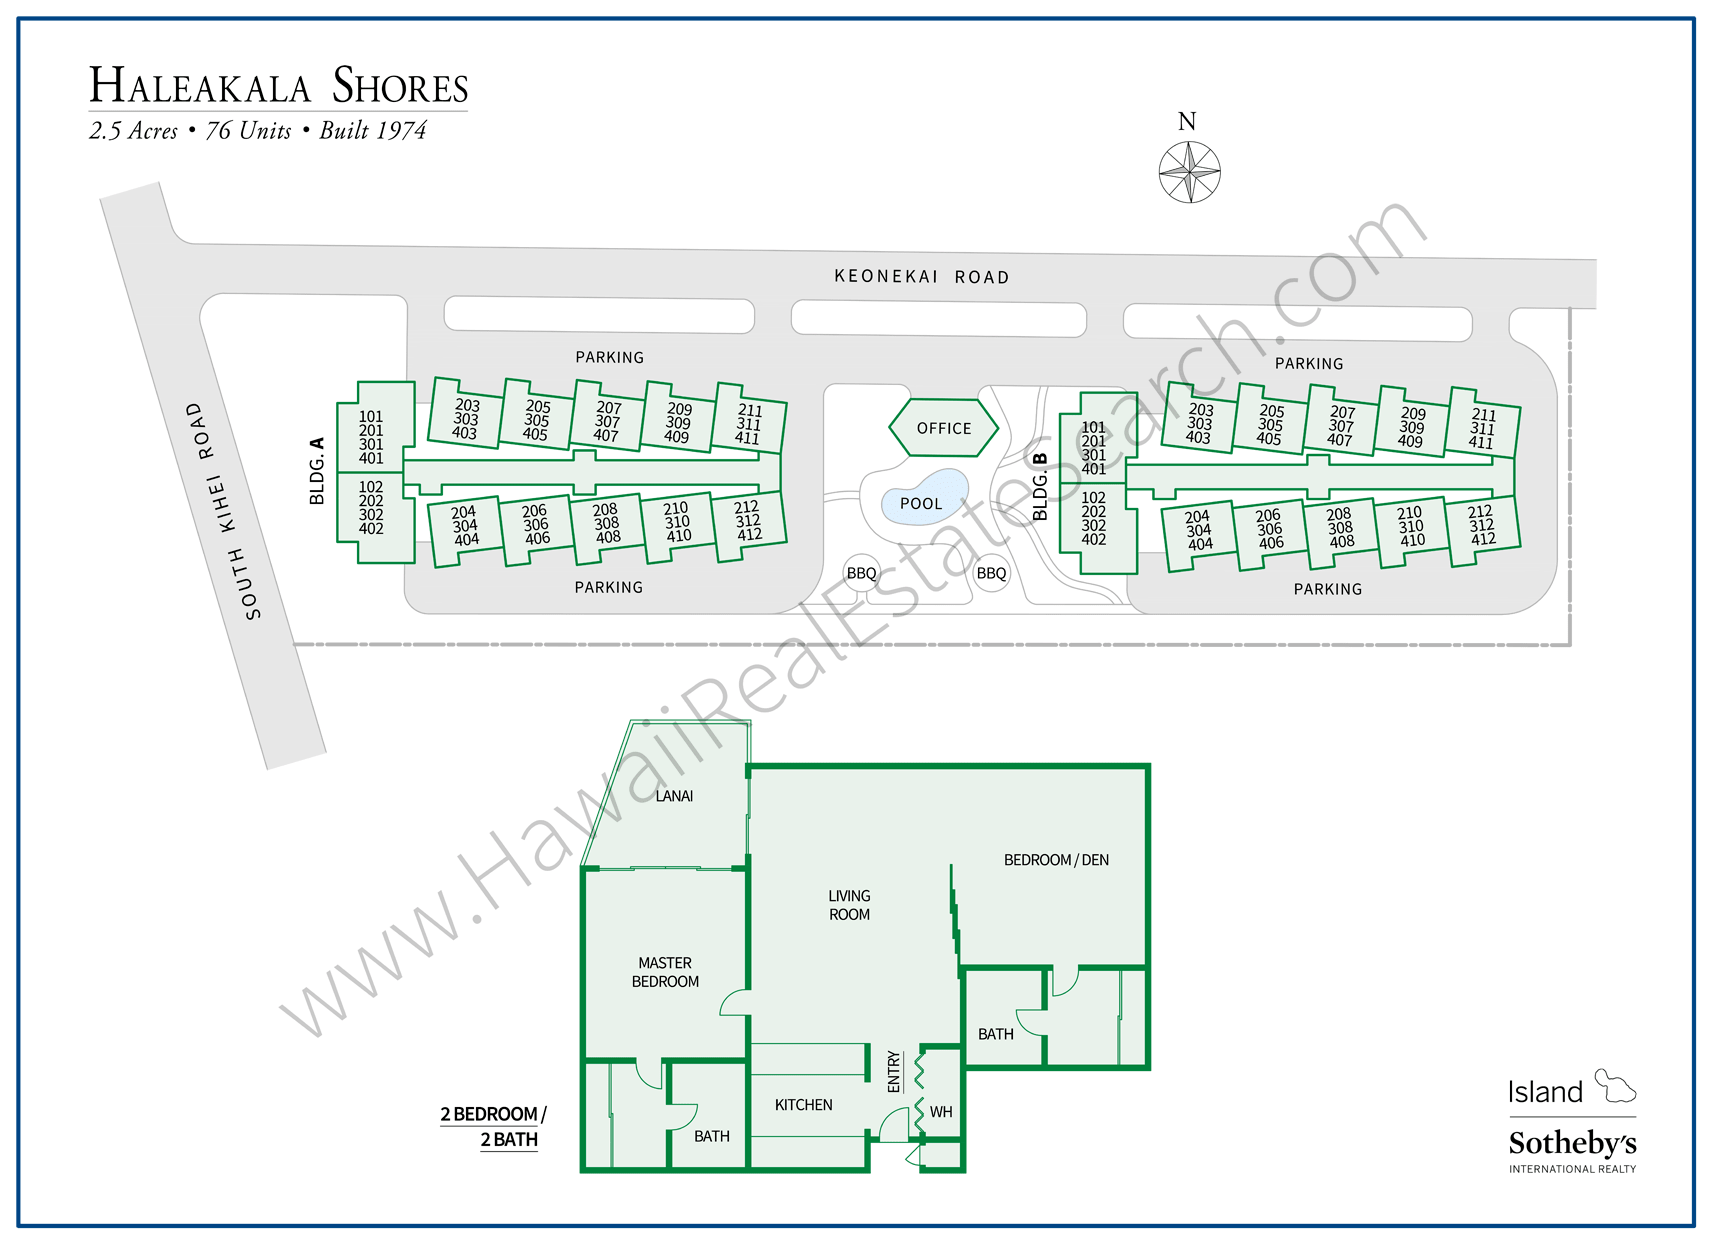 Haleakala Shores Property Map and Floor Plan